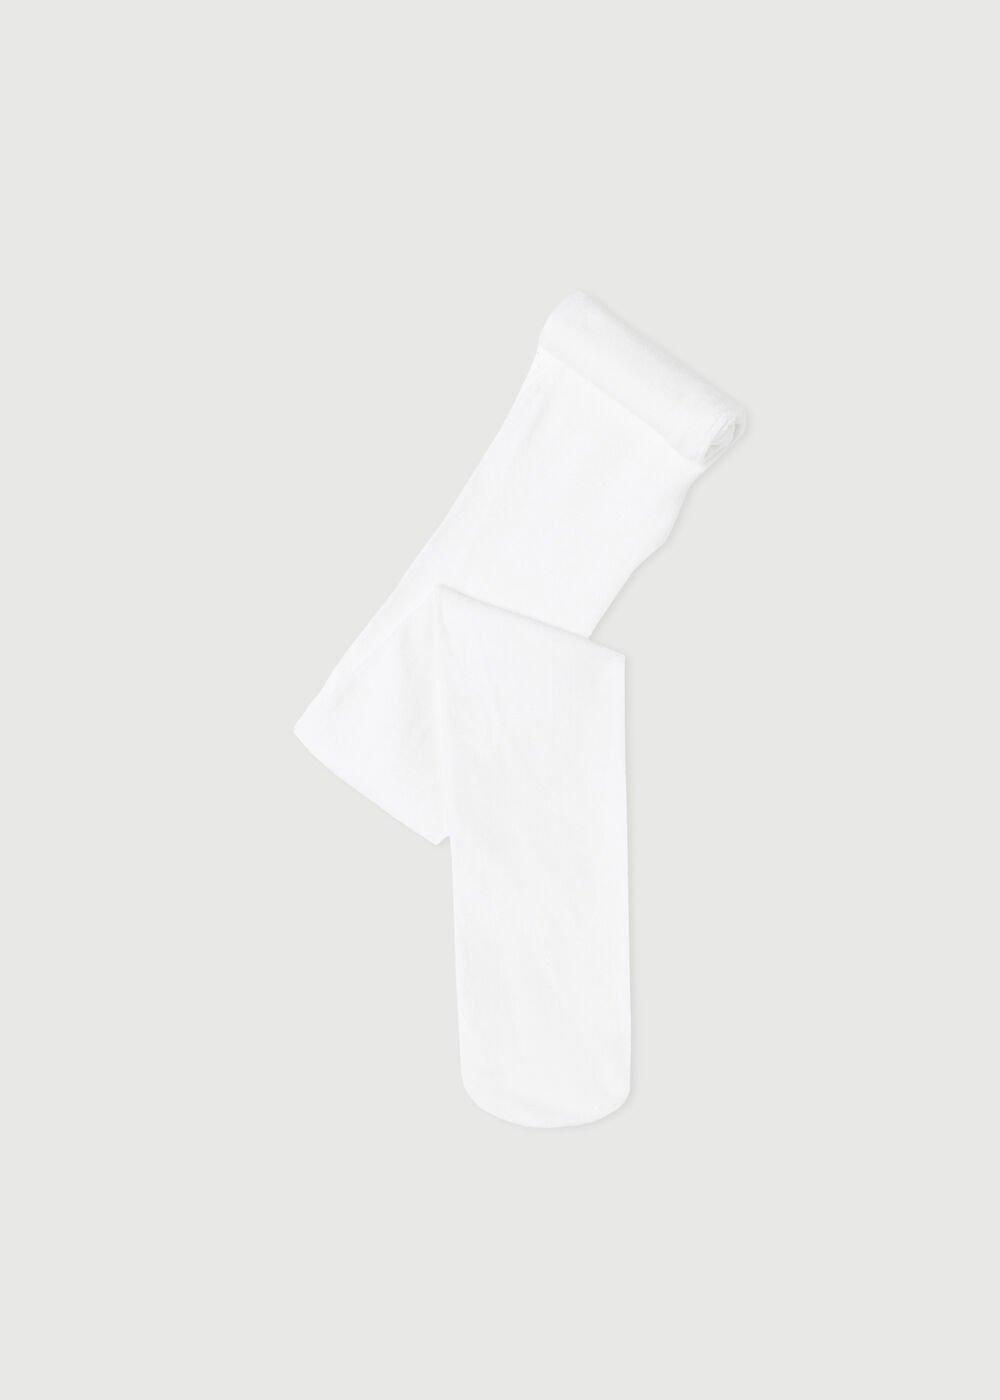 Calzedonia - White Cashmere Super Opaque Tights, Kids Girls